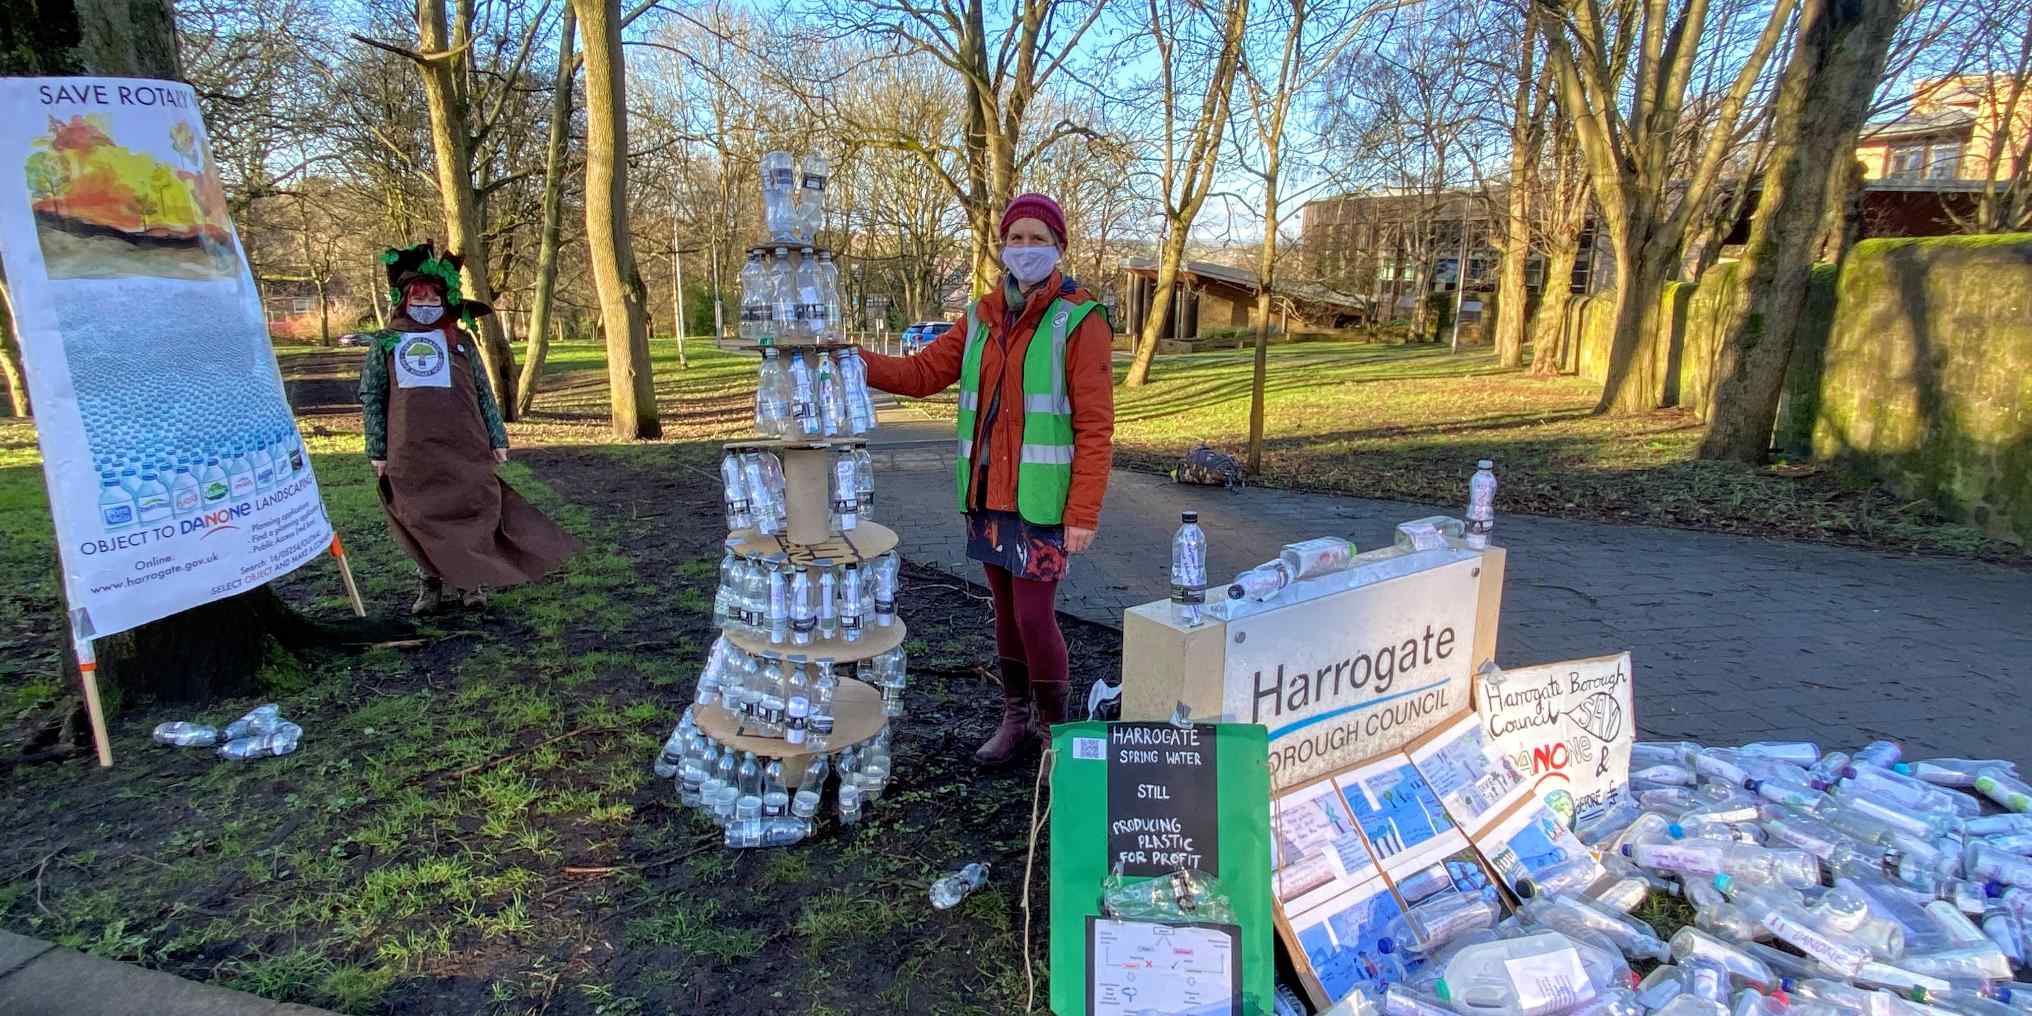 message in a bottle to Harrogate Borough Council over Danone Harrogate Spring Water